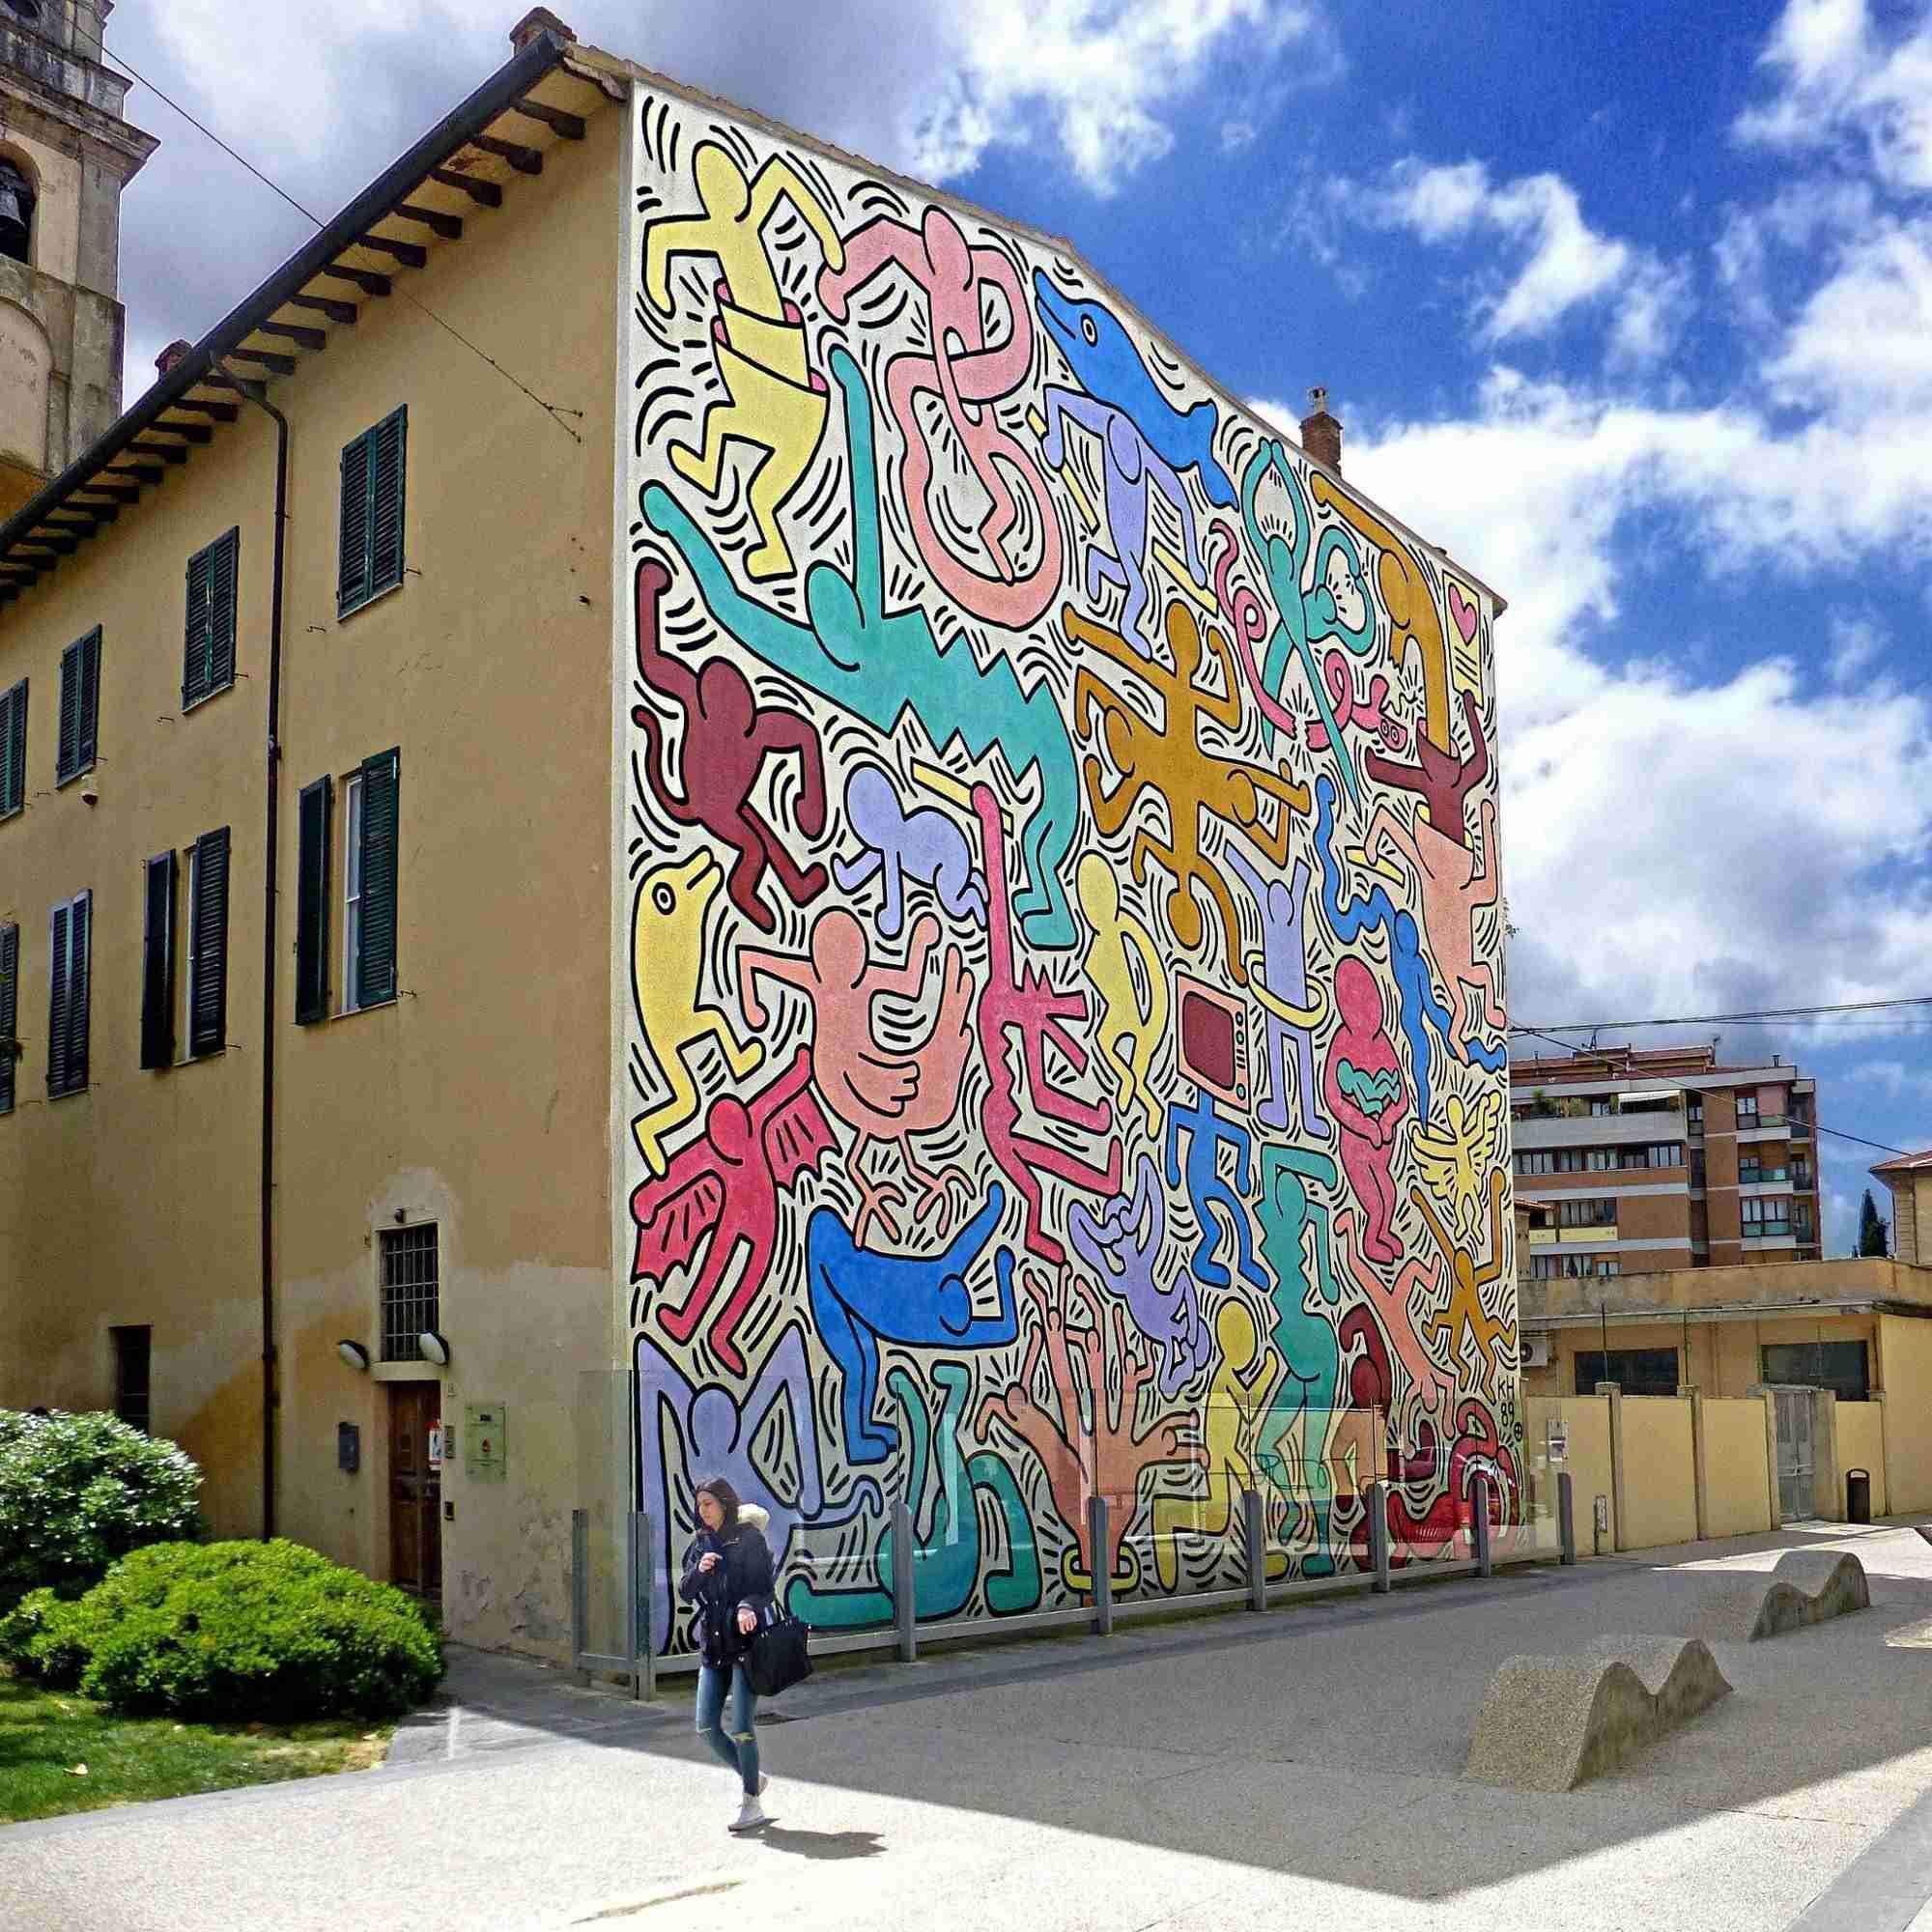 Keith Haring Mural "Tuttomondo" in Pisa, Tuscany